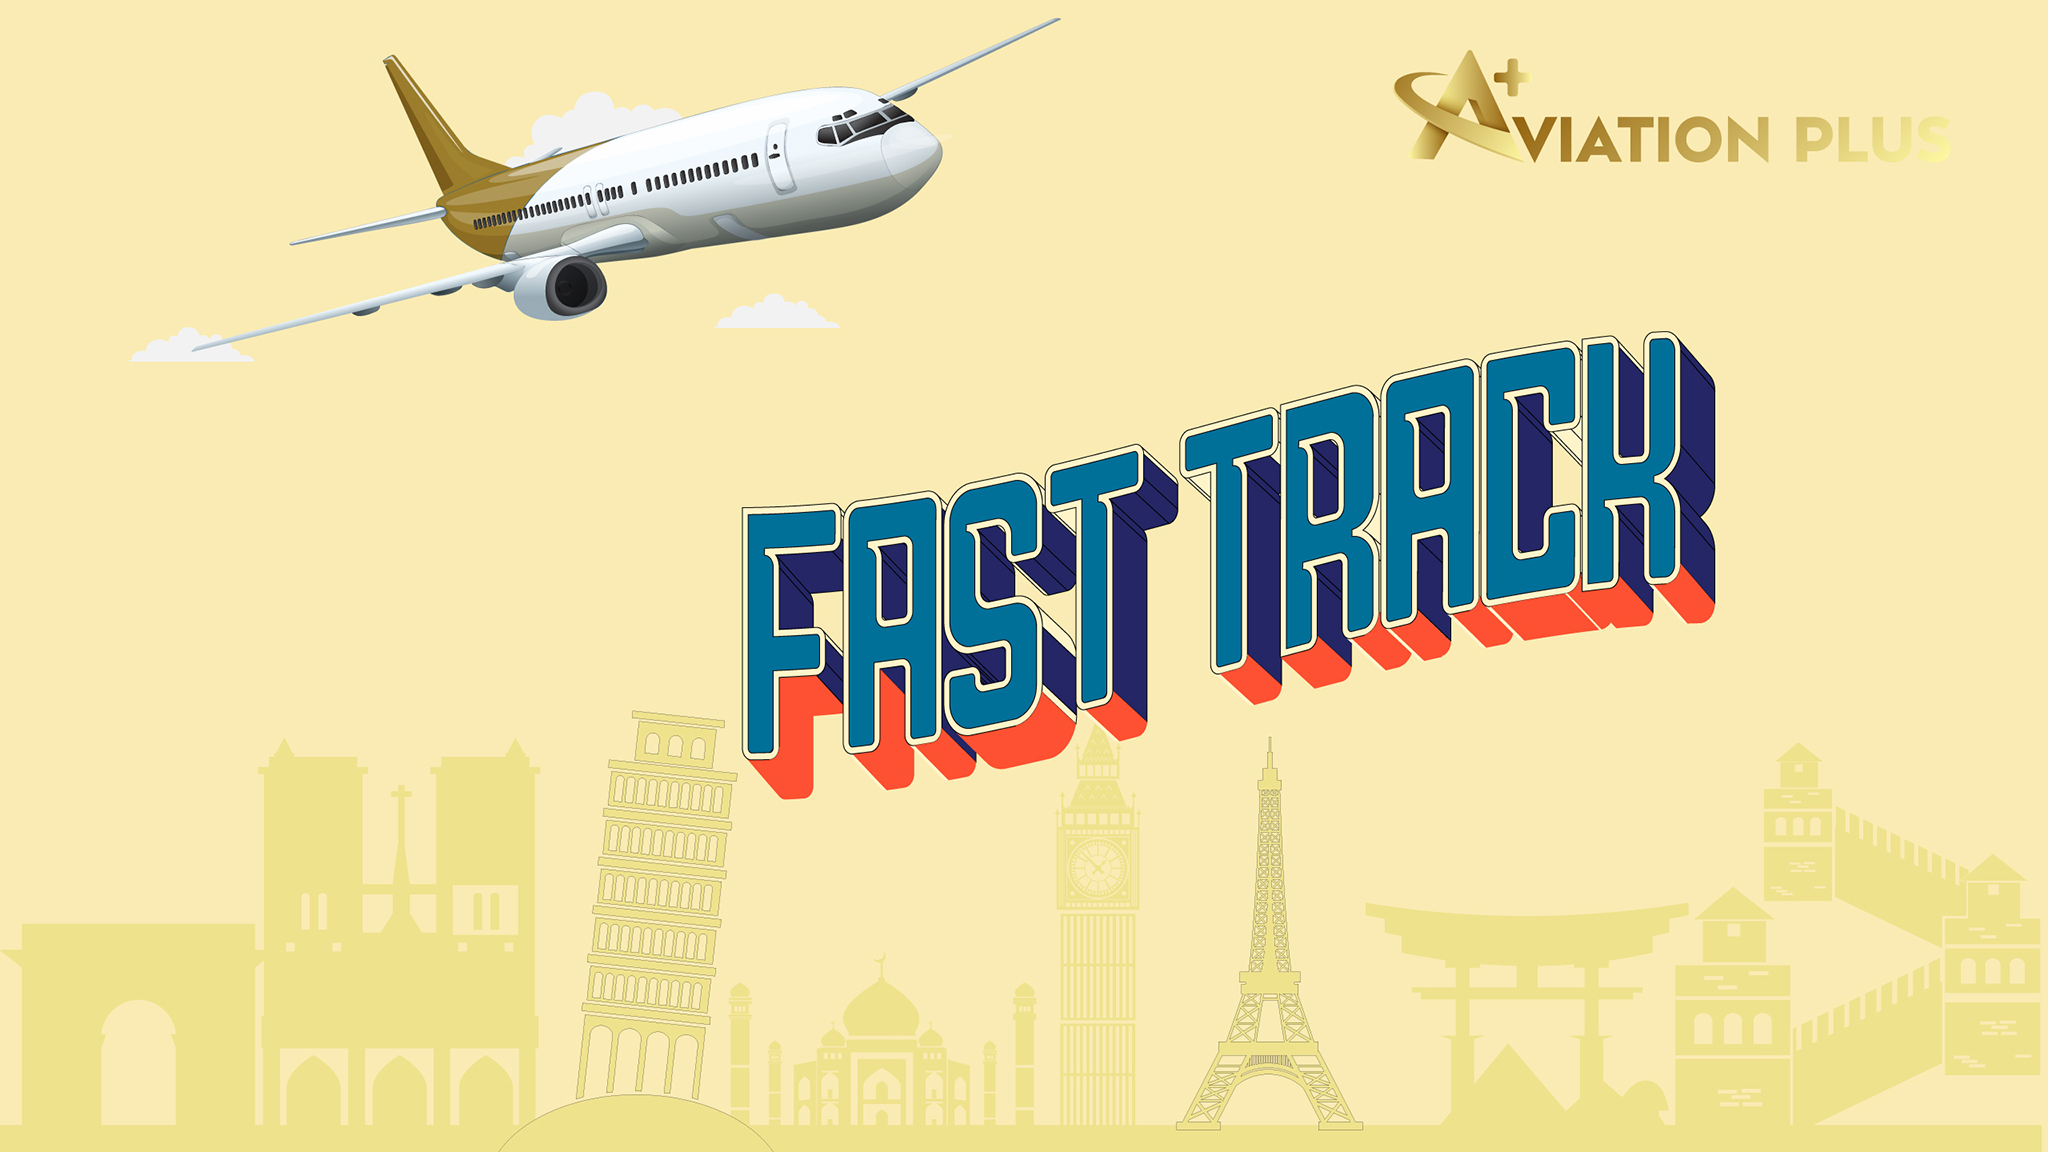 Aviation Plus - Vietnam Fast Track Services